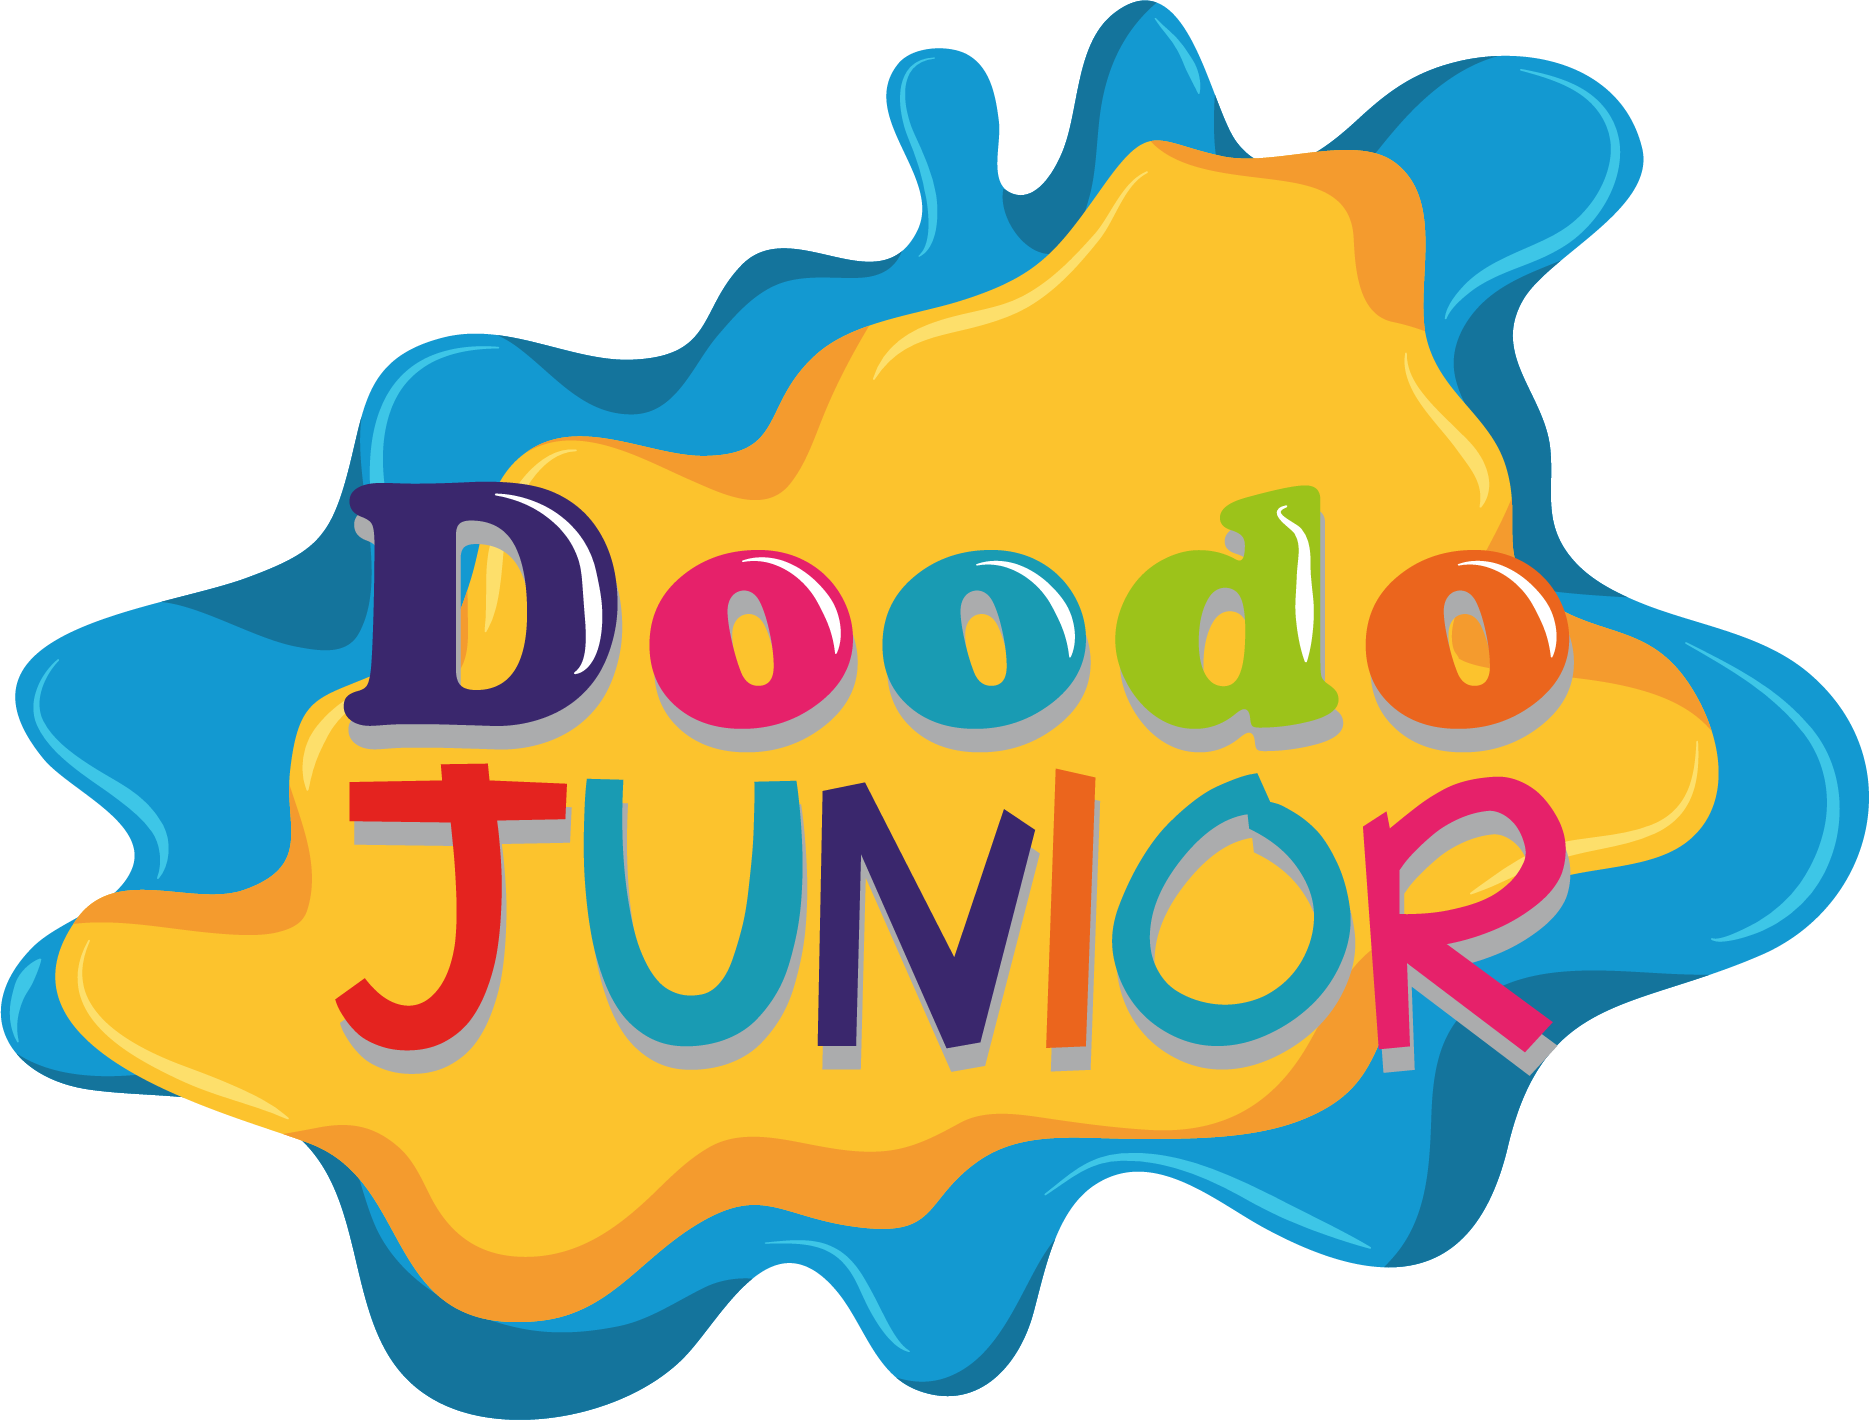 Doodo Junior